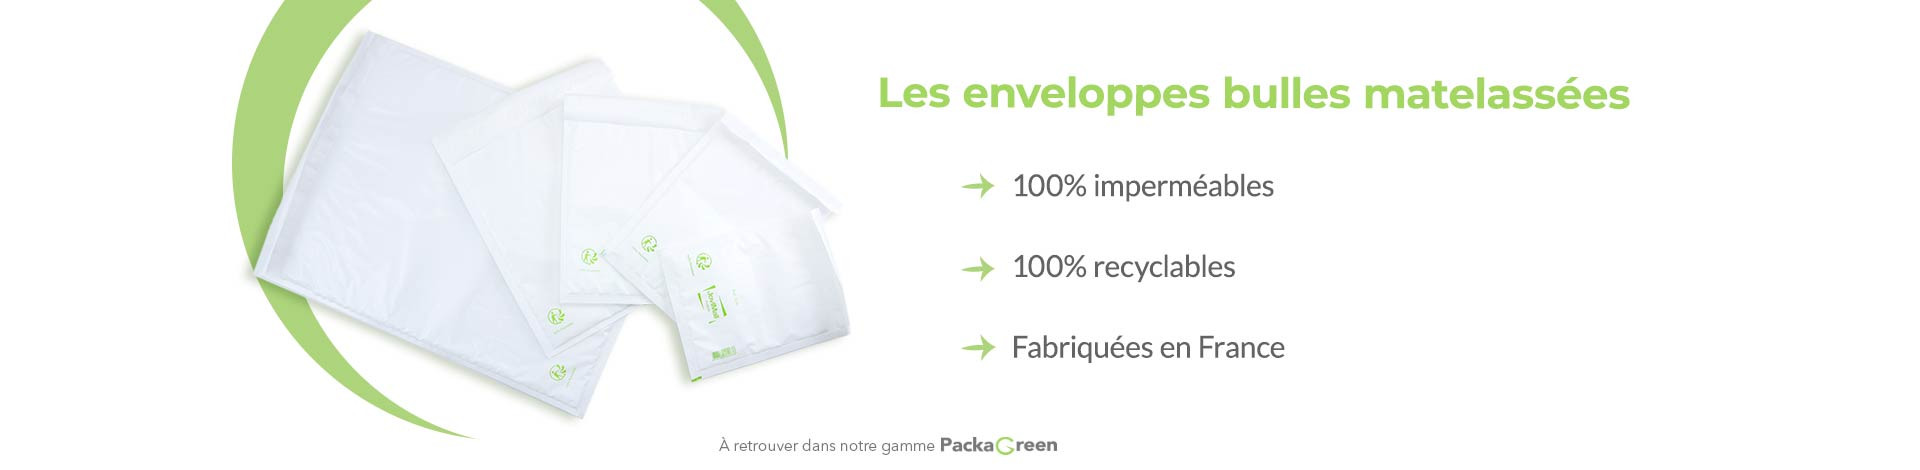 Les enveloppes bulles 100% recyclables